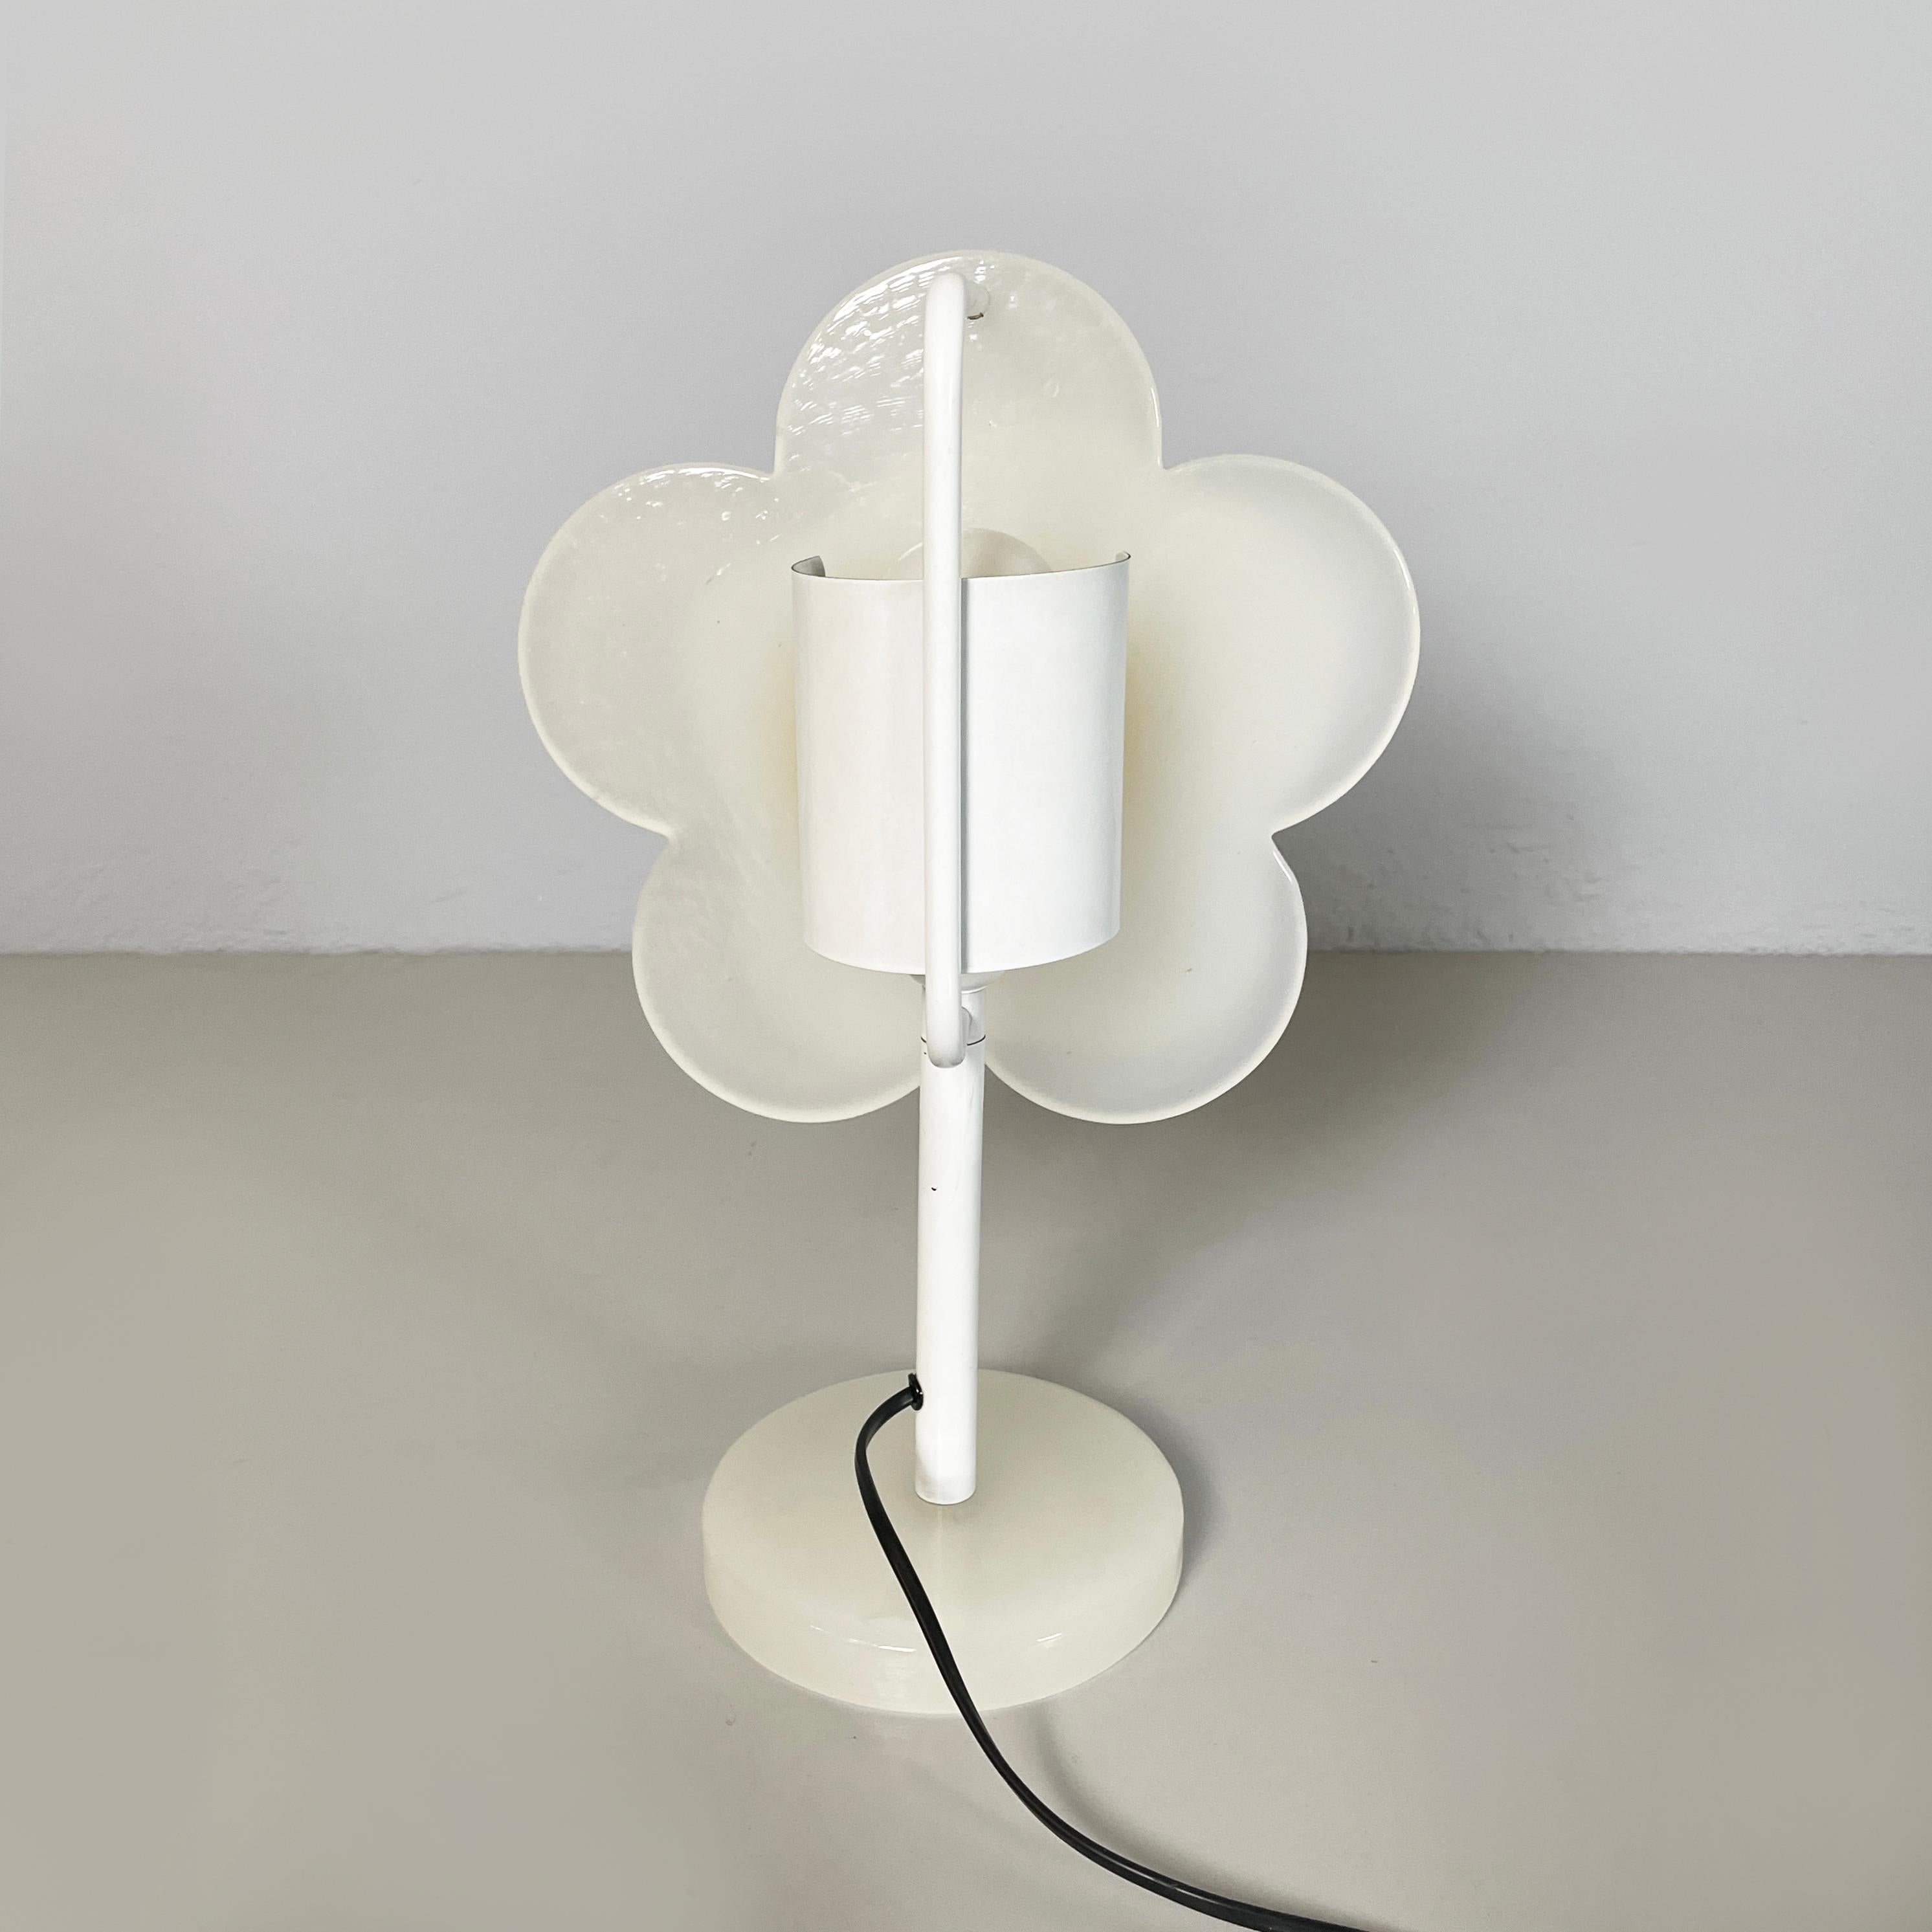 Italian modern glass table lamp Fiore  in daisy flower shape by Paf Studio 1980s 1